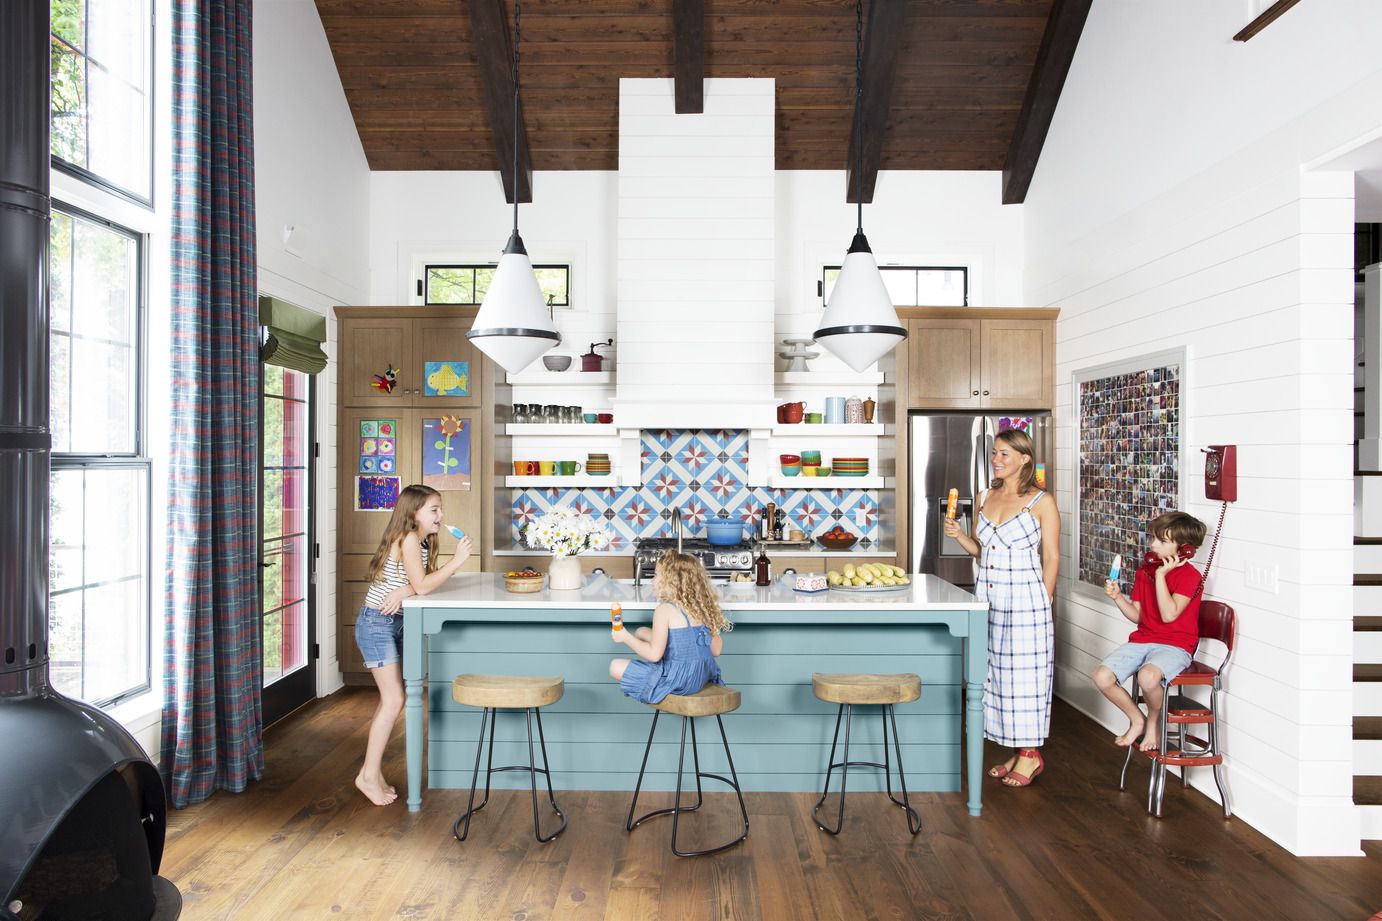 20 Best Kitchen Design Ideas   Pictures of Country Kitchen Decor